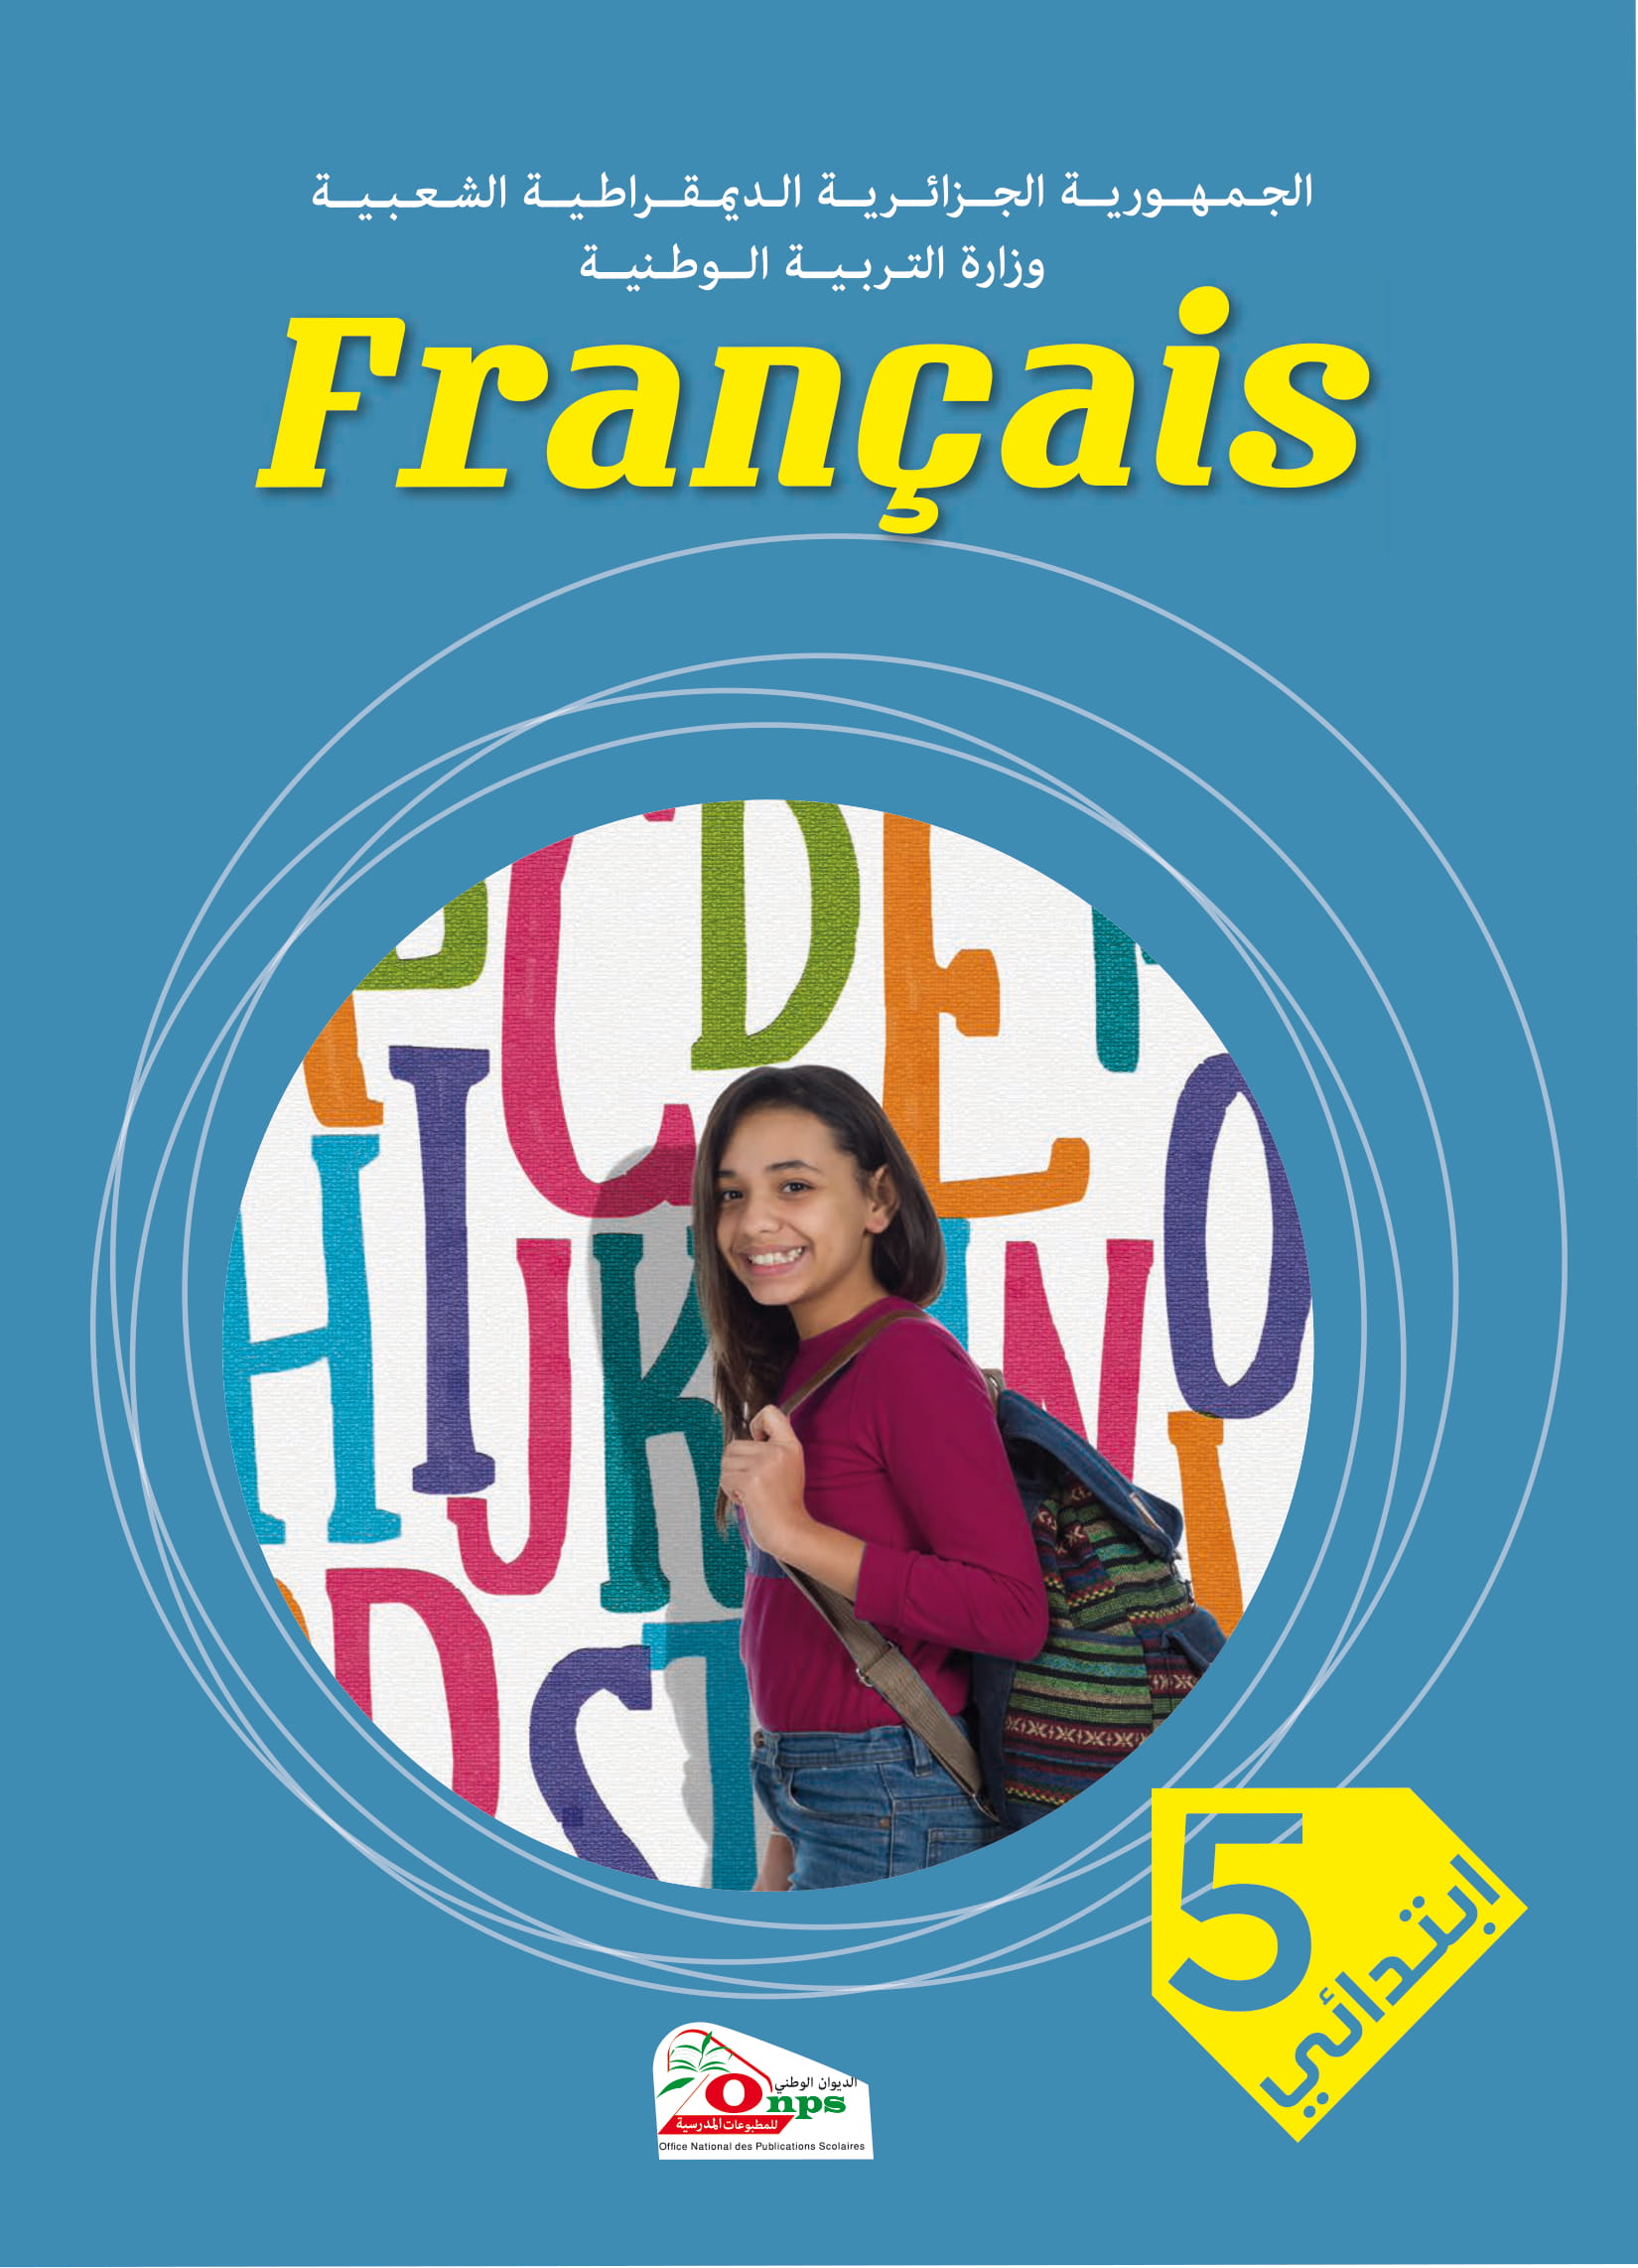 MS 506 Couverture Francais 5Ap 1 - الديوان الوطني للمطبوعات المدرسية